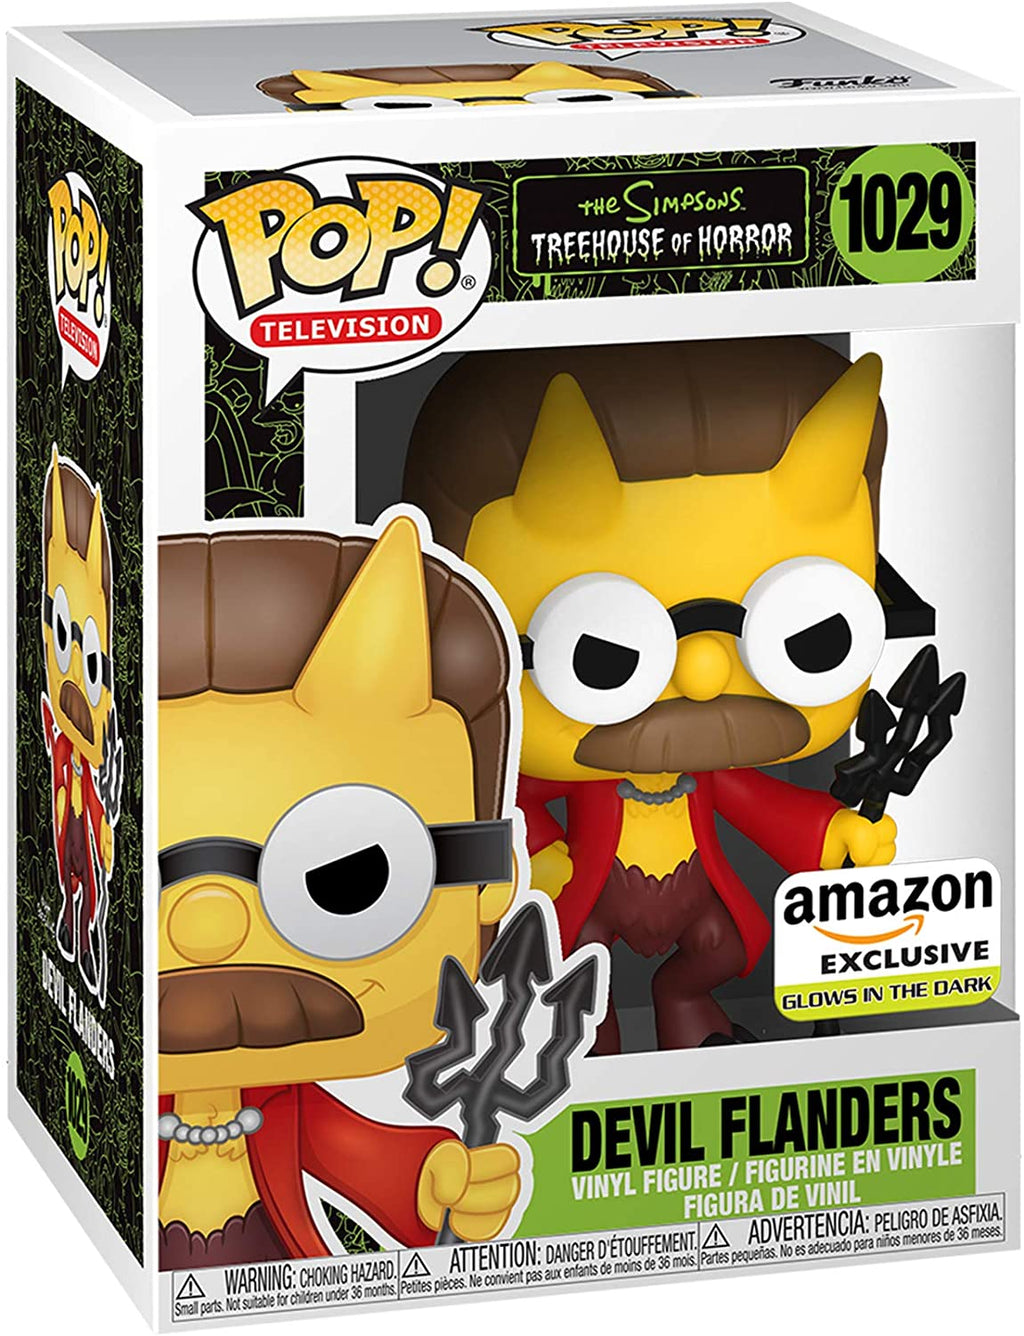 Pop Television The Simpsons 3.75 Inch Action Figure Exclusive - Devil Flanders #1029